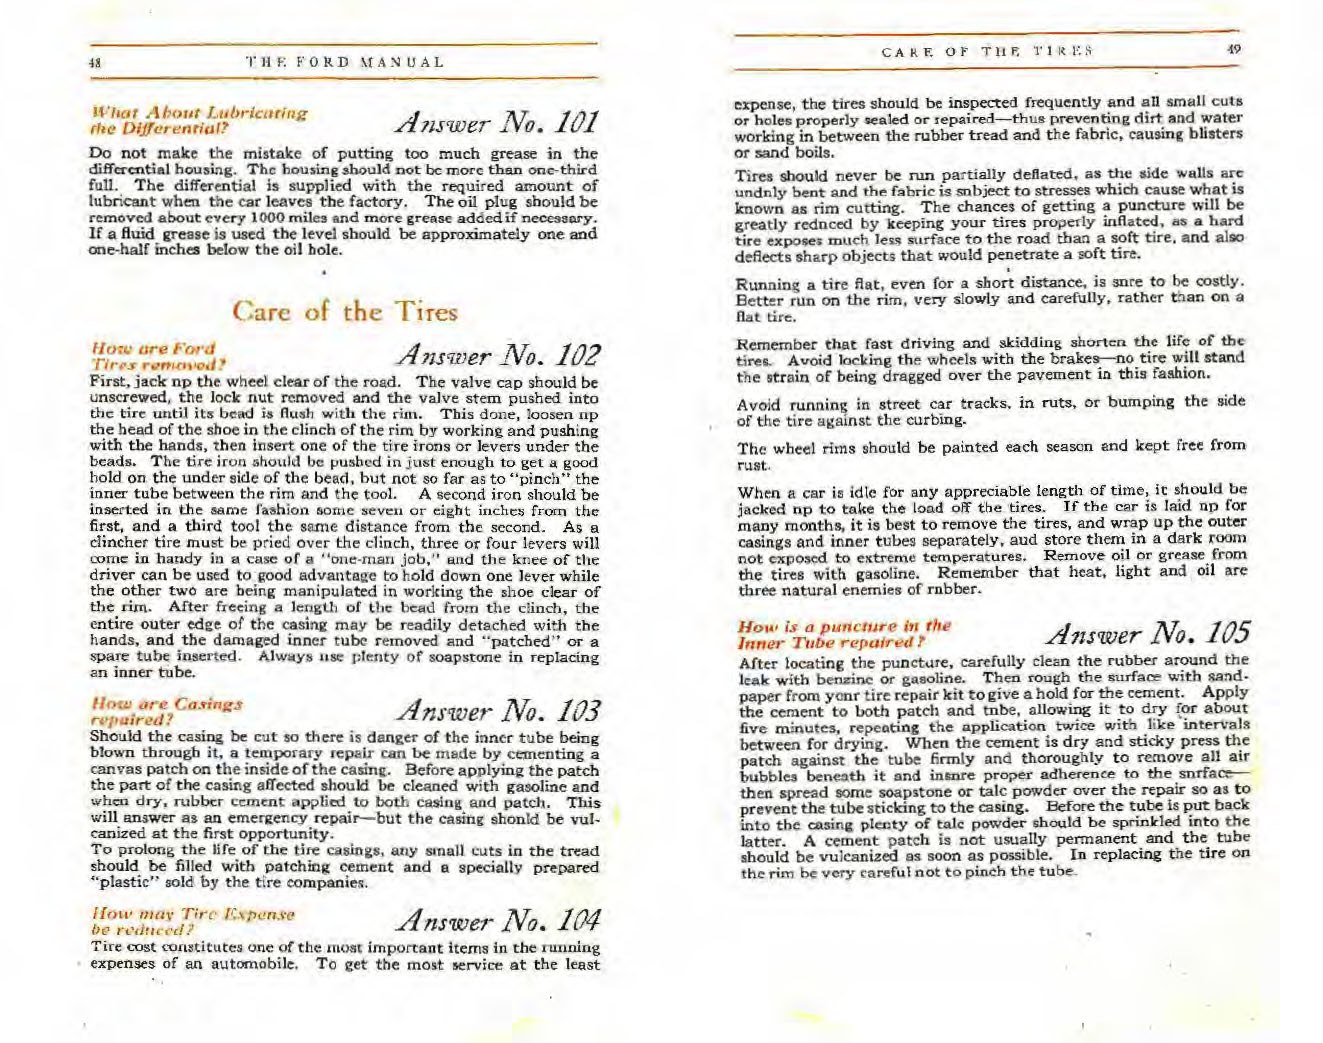 n_1917 Ford Owners Manual-48-49.jpg